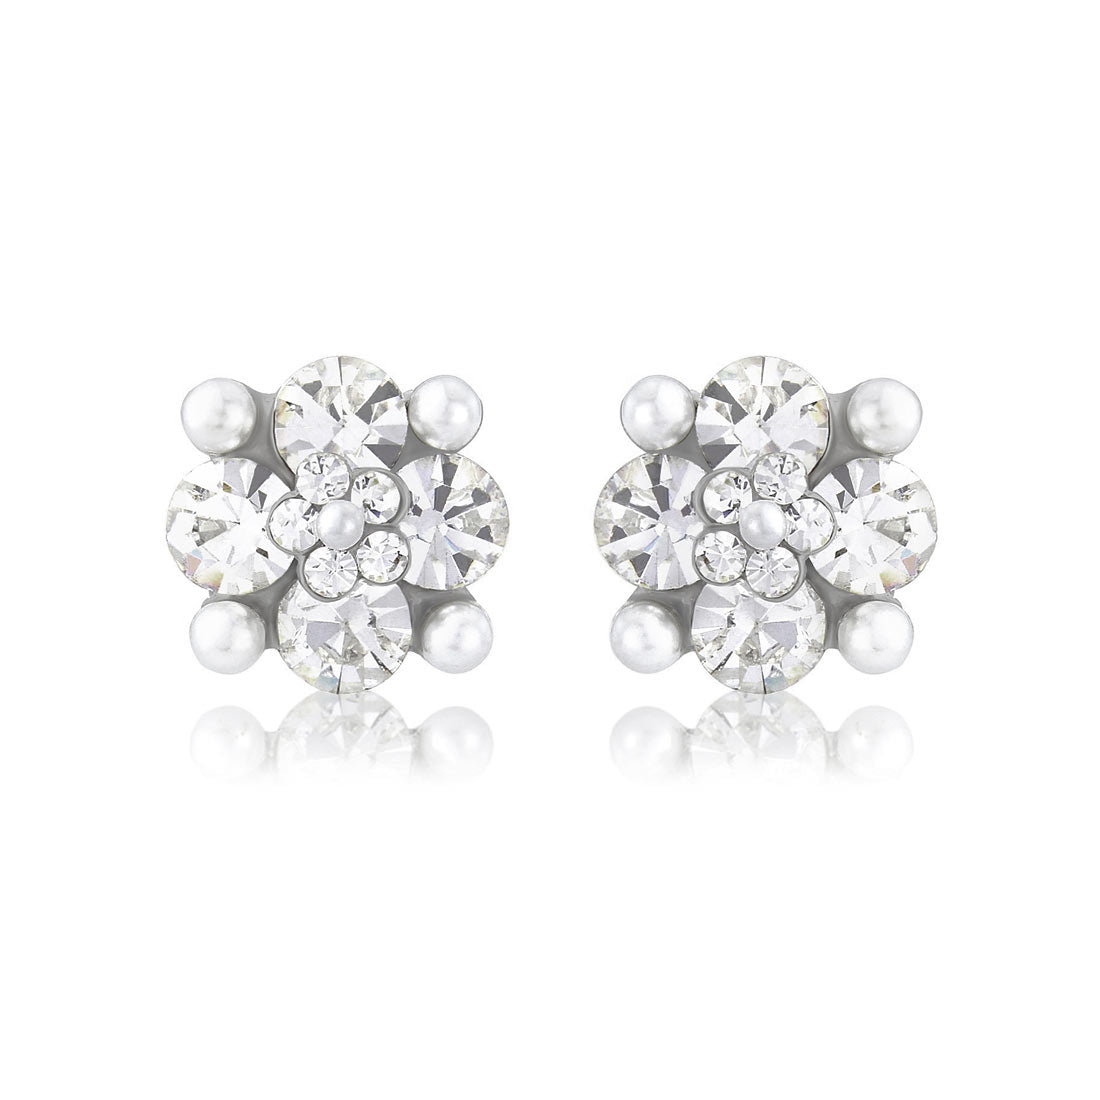 Delicate Pearl & Crystal Clip On Wedding Earrings